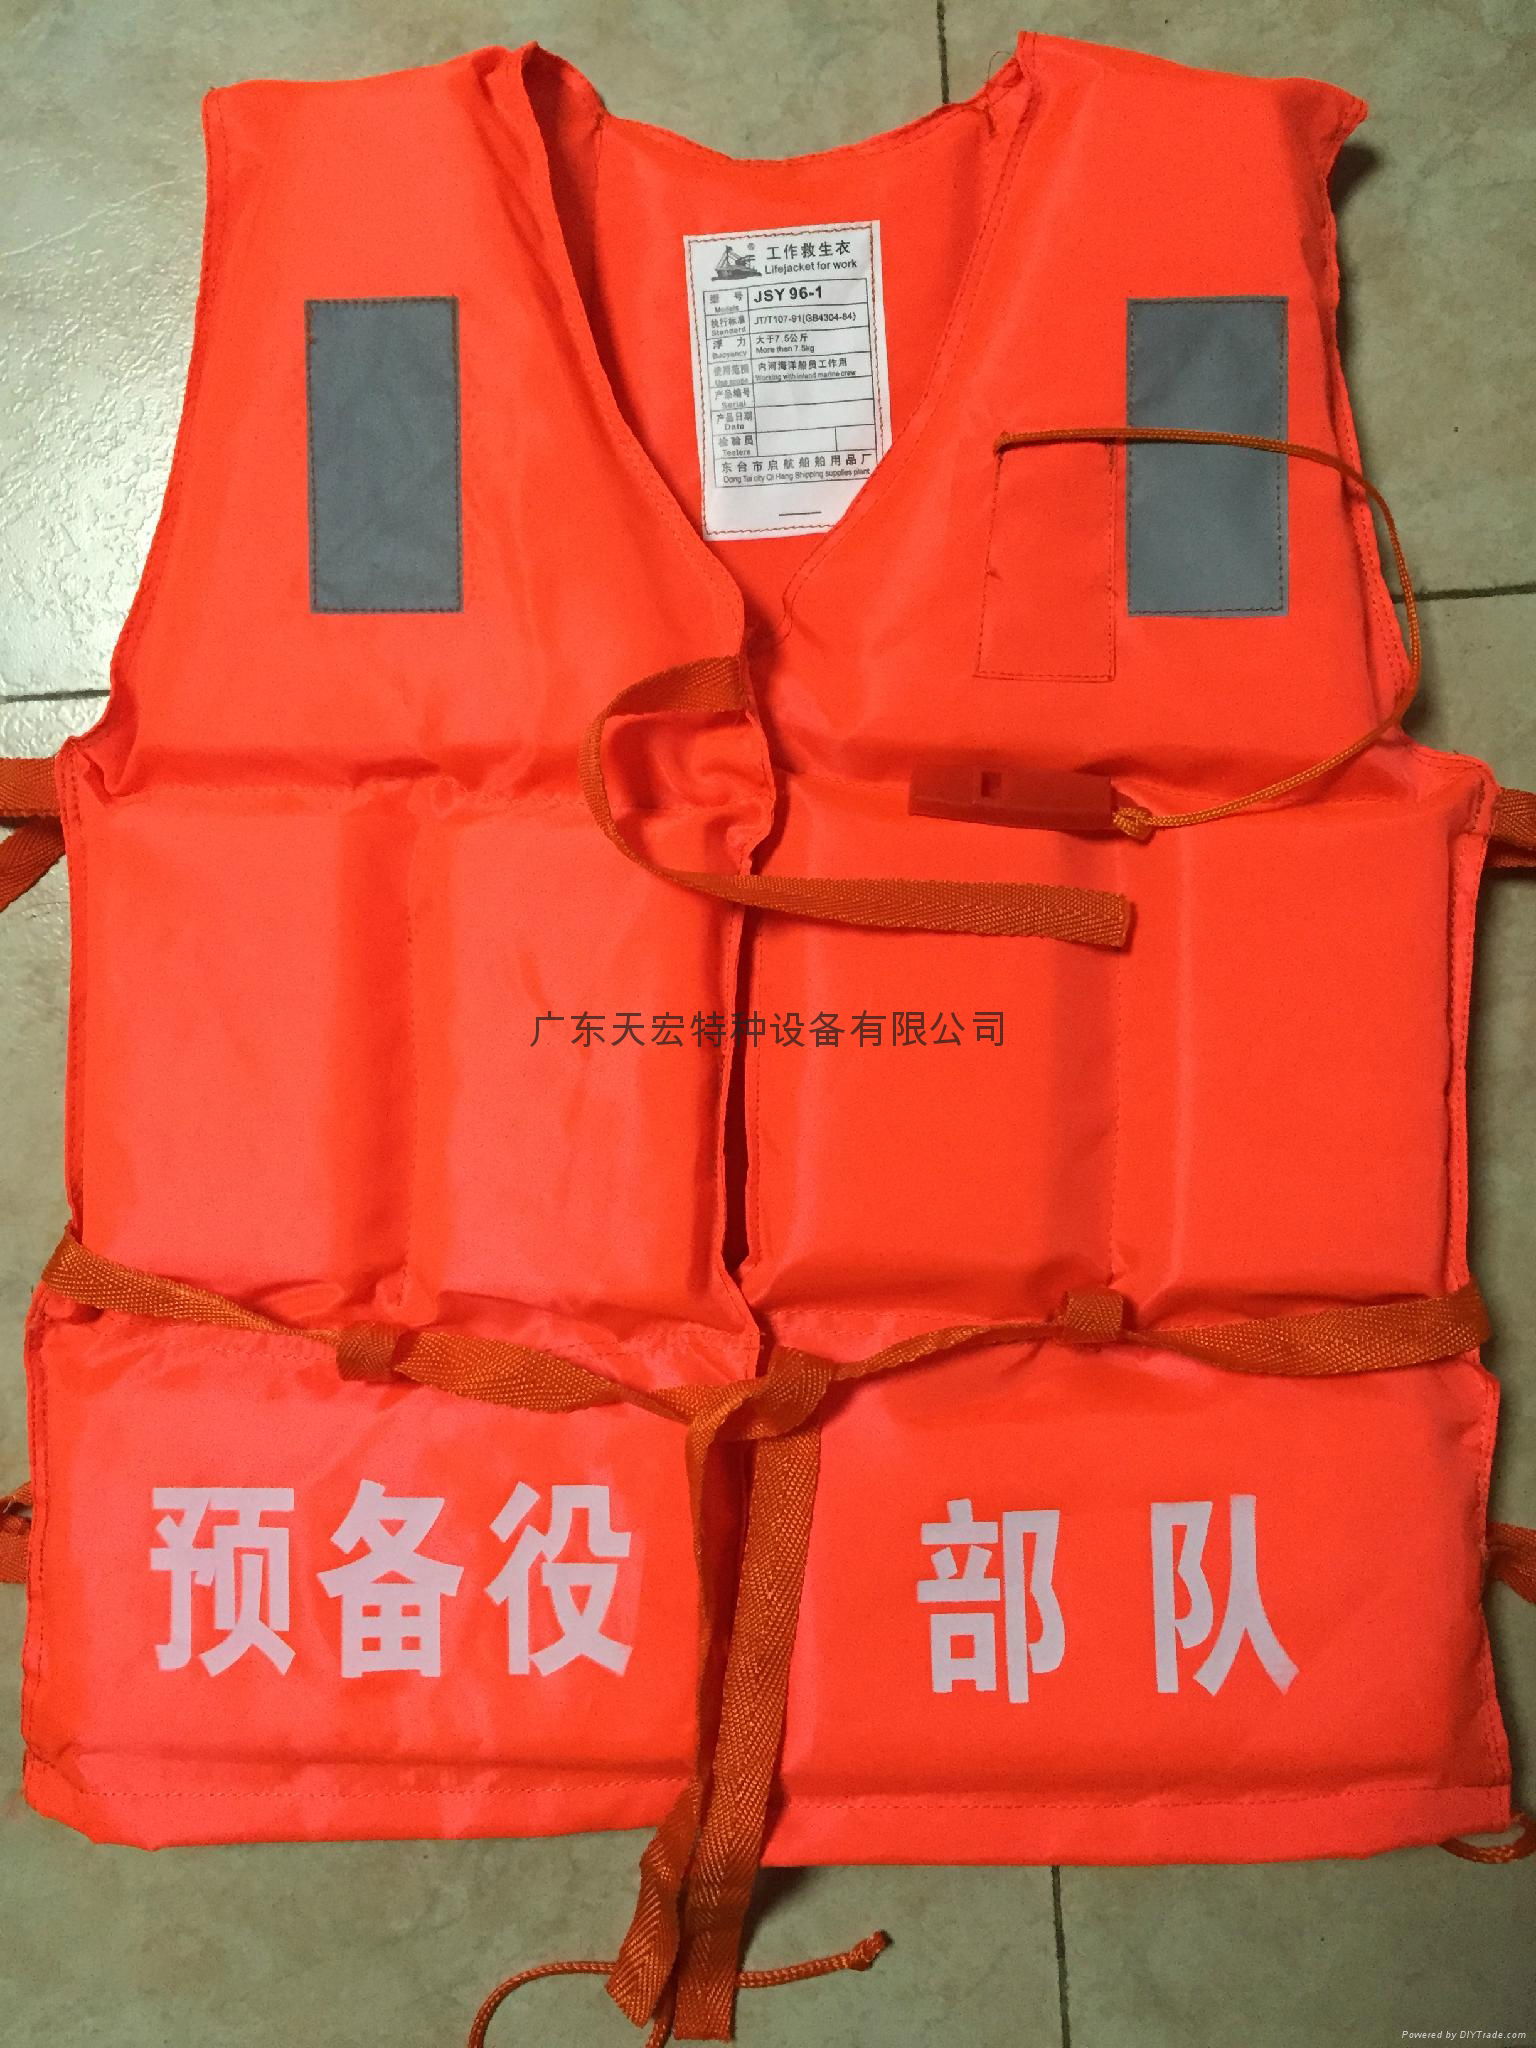 Rescue life jacket